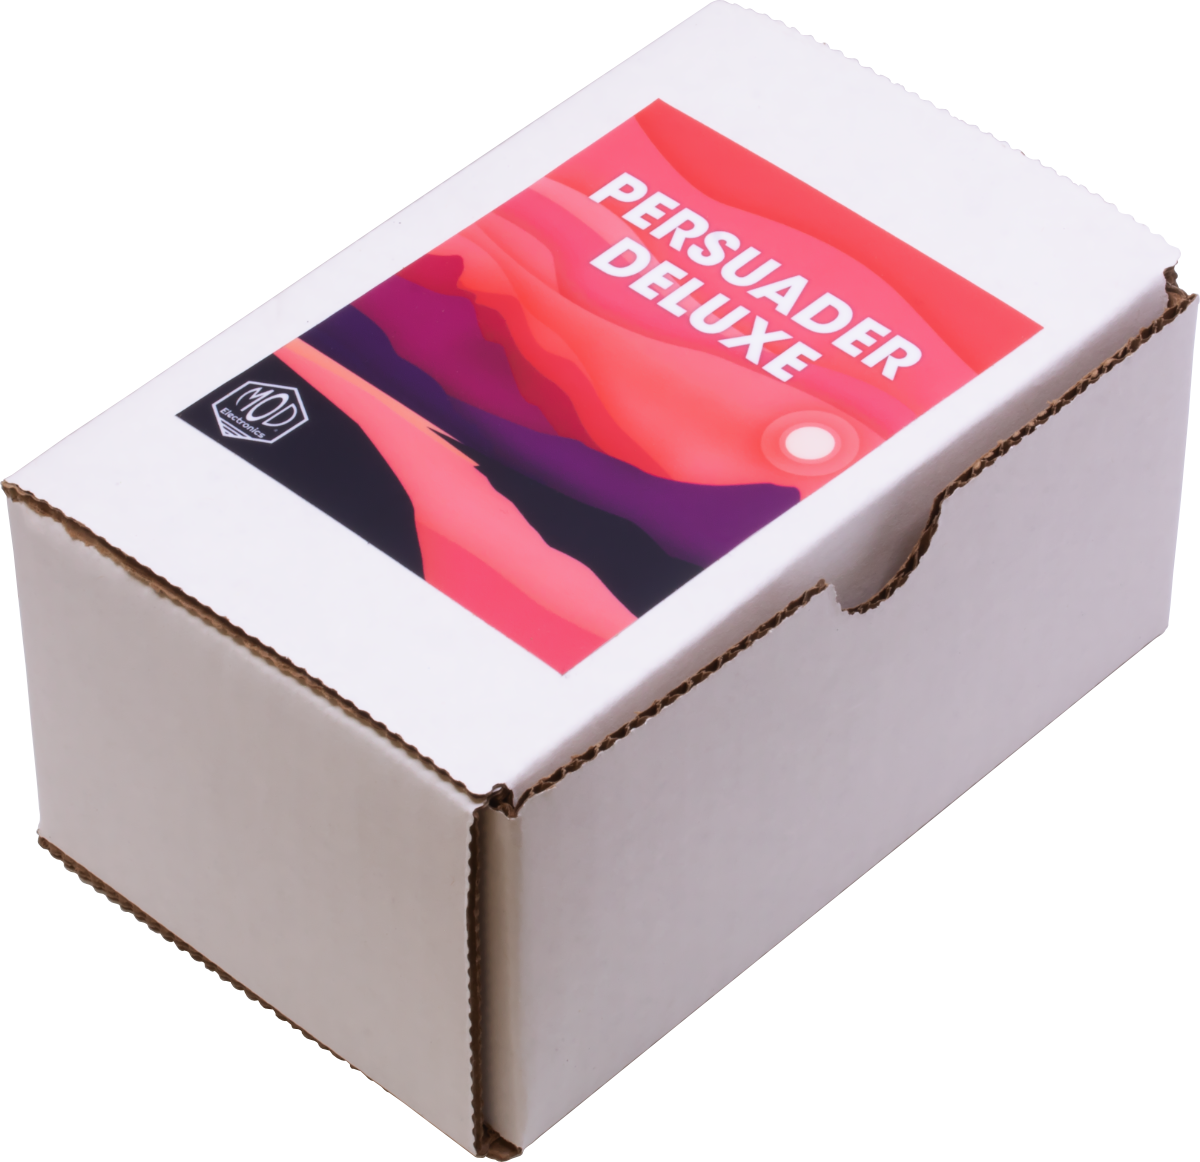 Persuader Deluxe Packaging